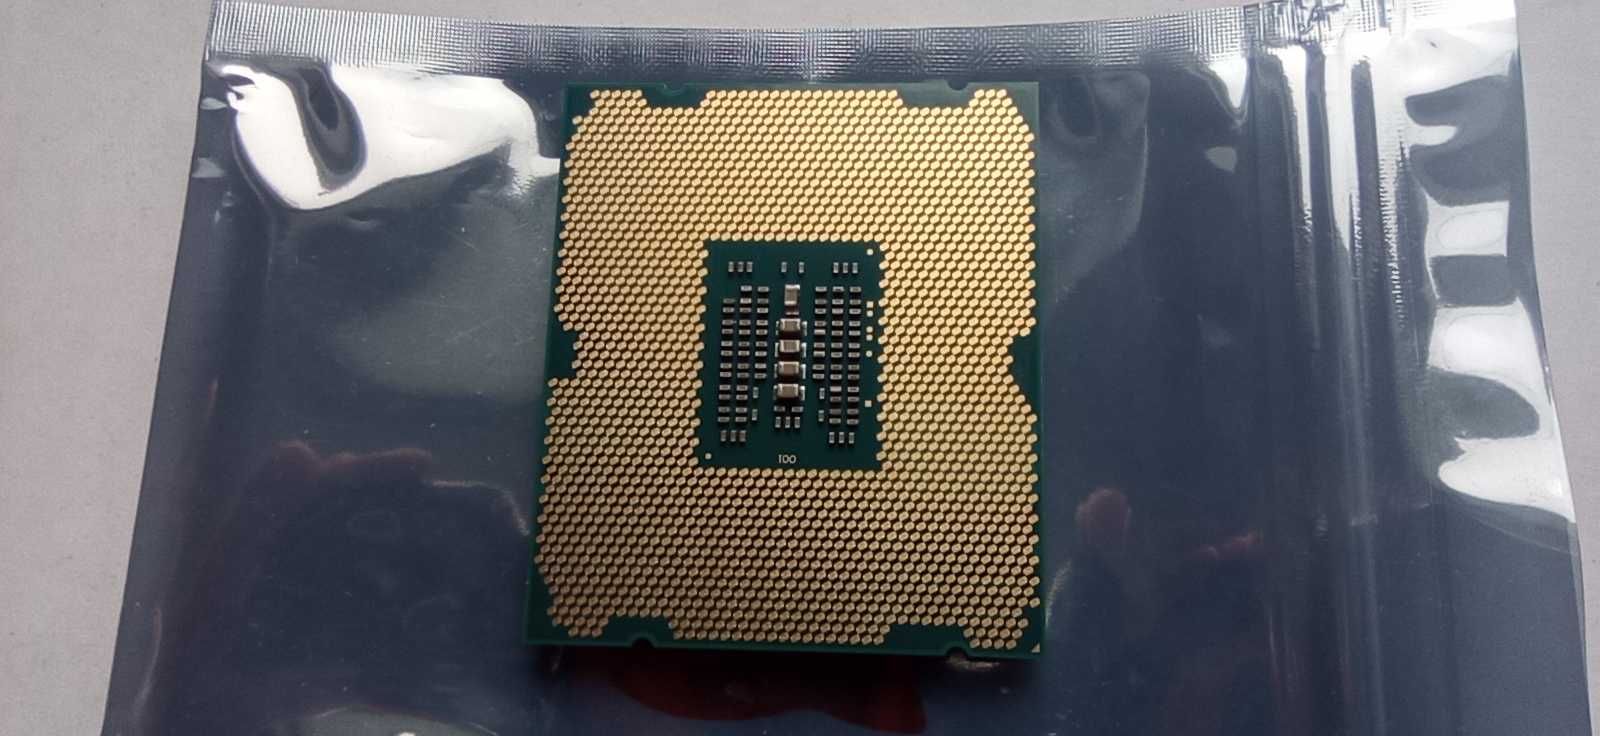 Intel Xeon E5-1620 V2